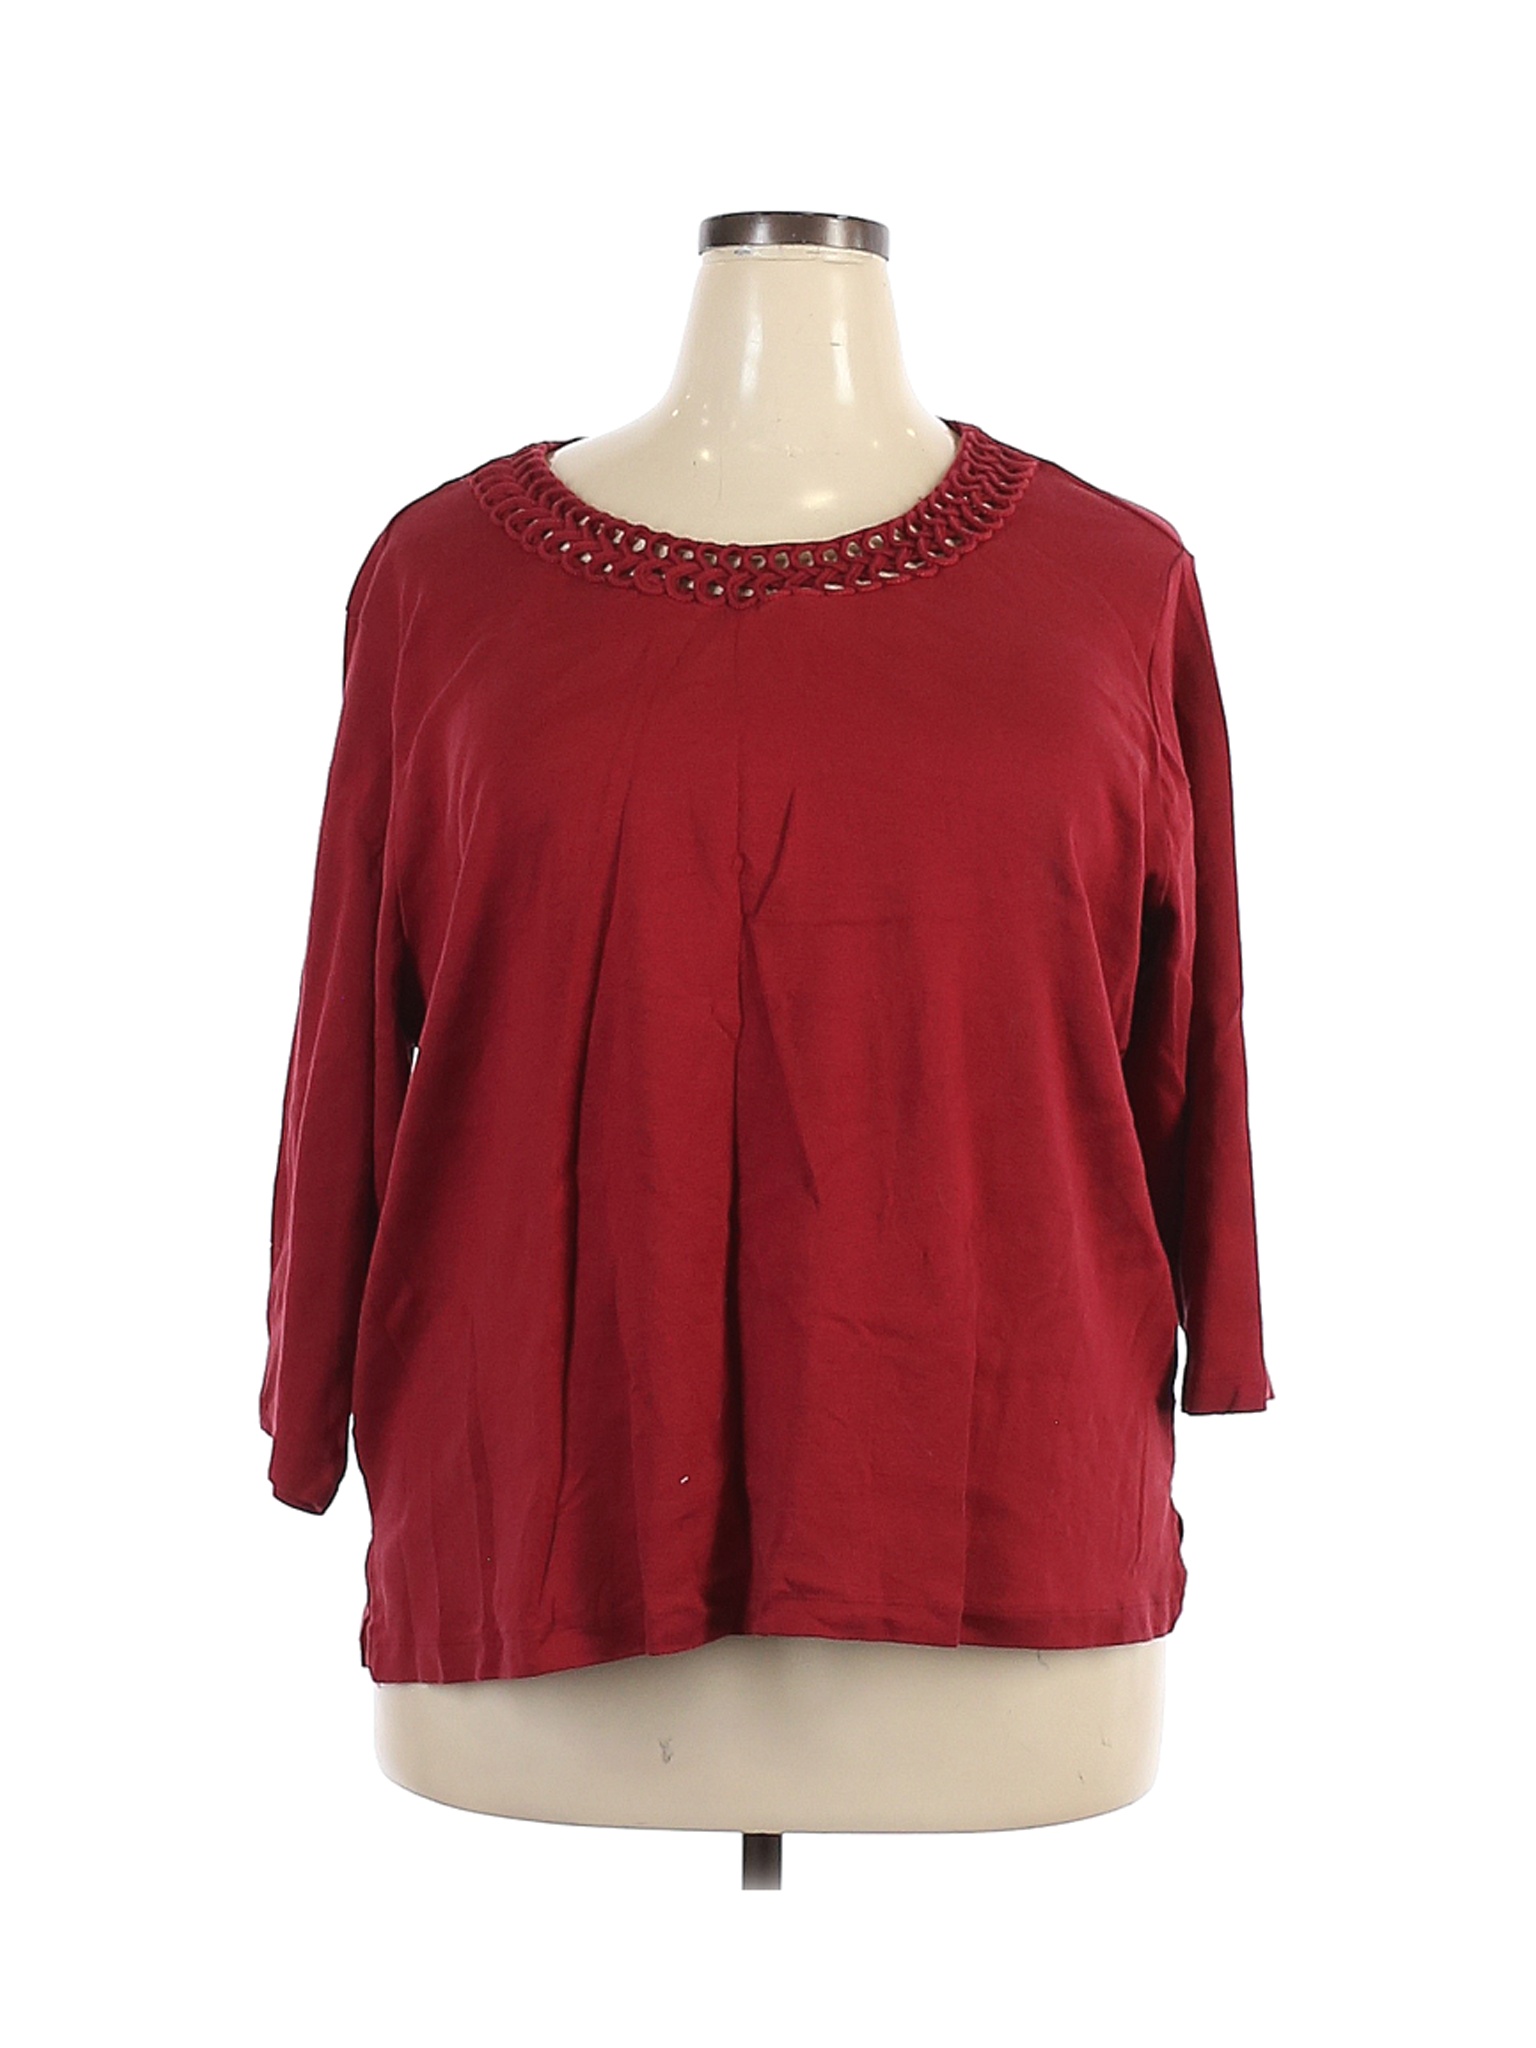 Rebecca Malone Women Red Long Sleeve Top 3X Plus | eBay